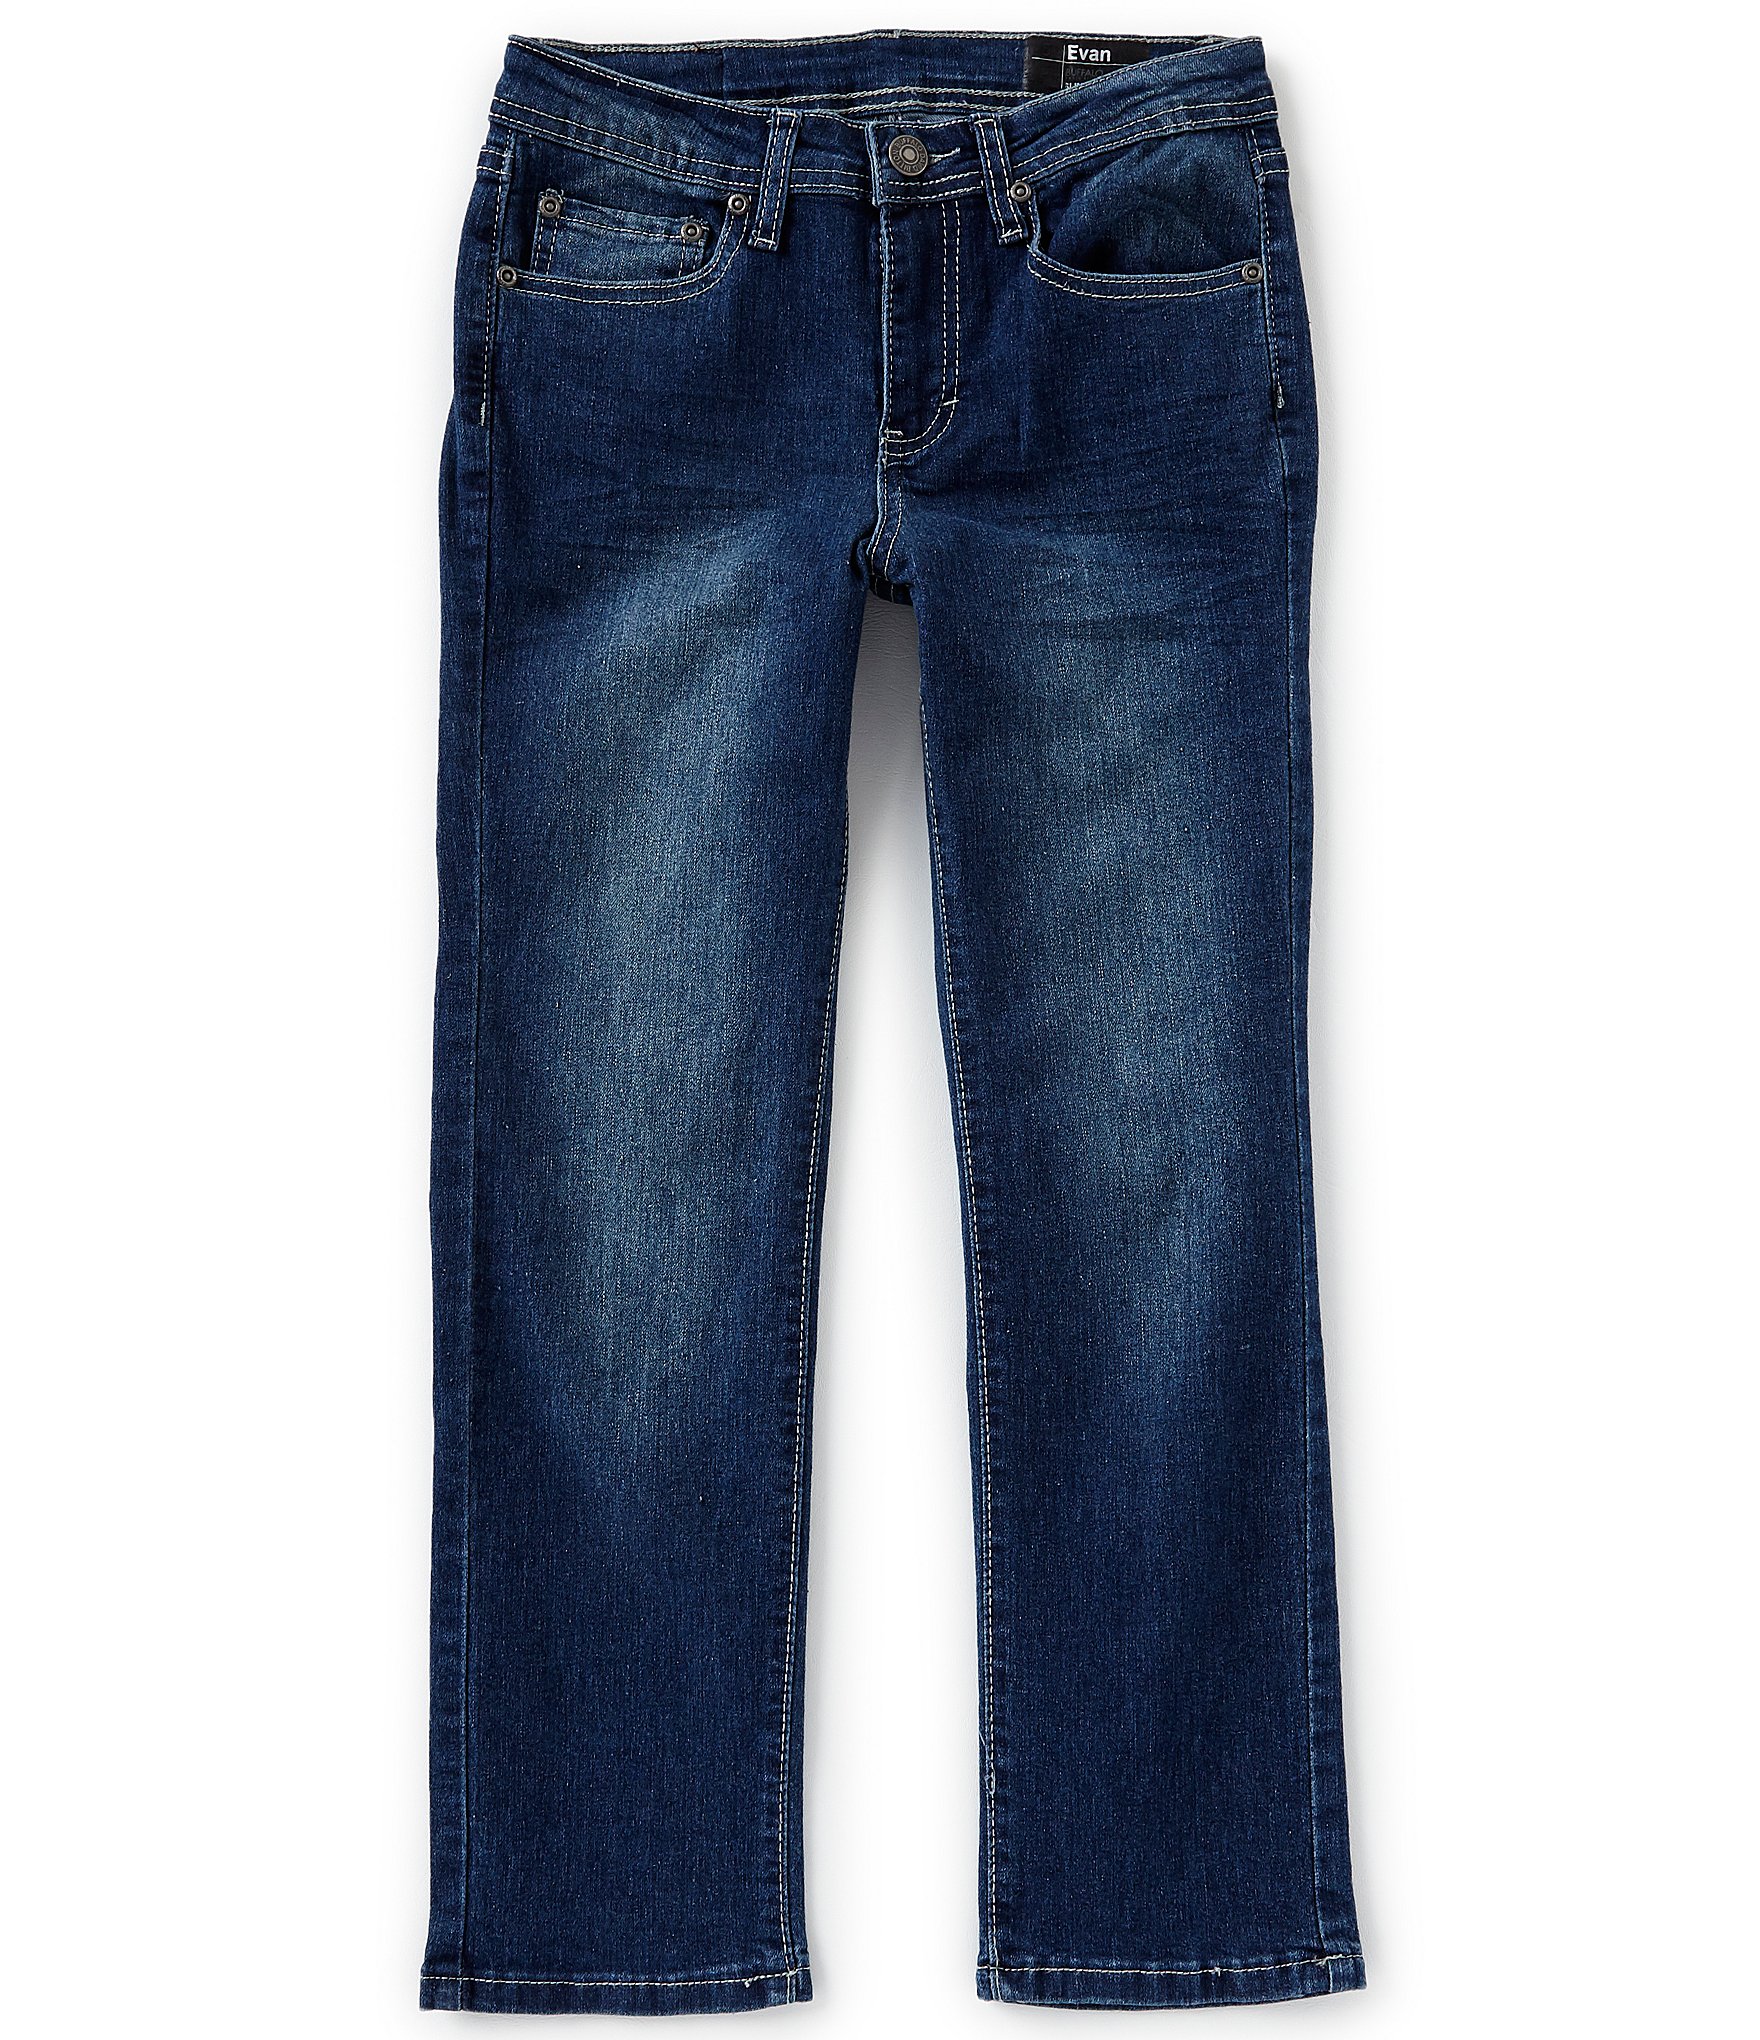 Axel Jeans Tunxis Boot Cut Jeans for Boys – Glik's